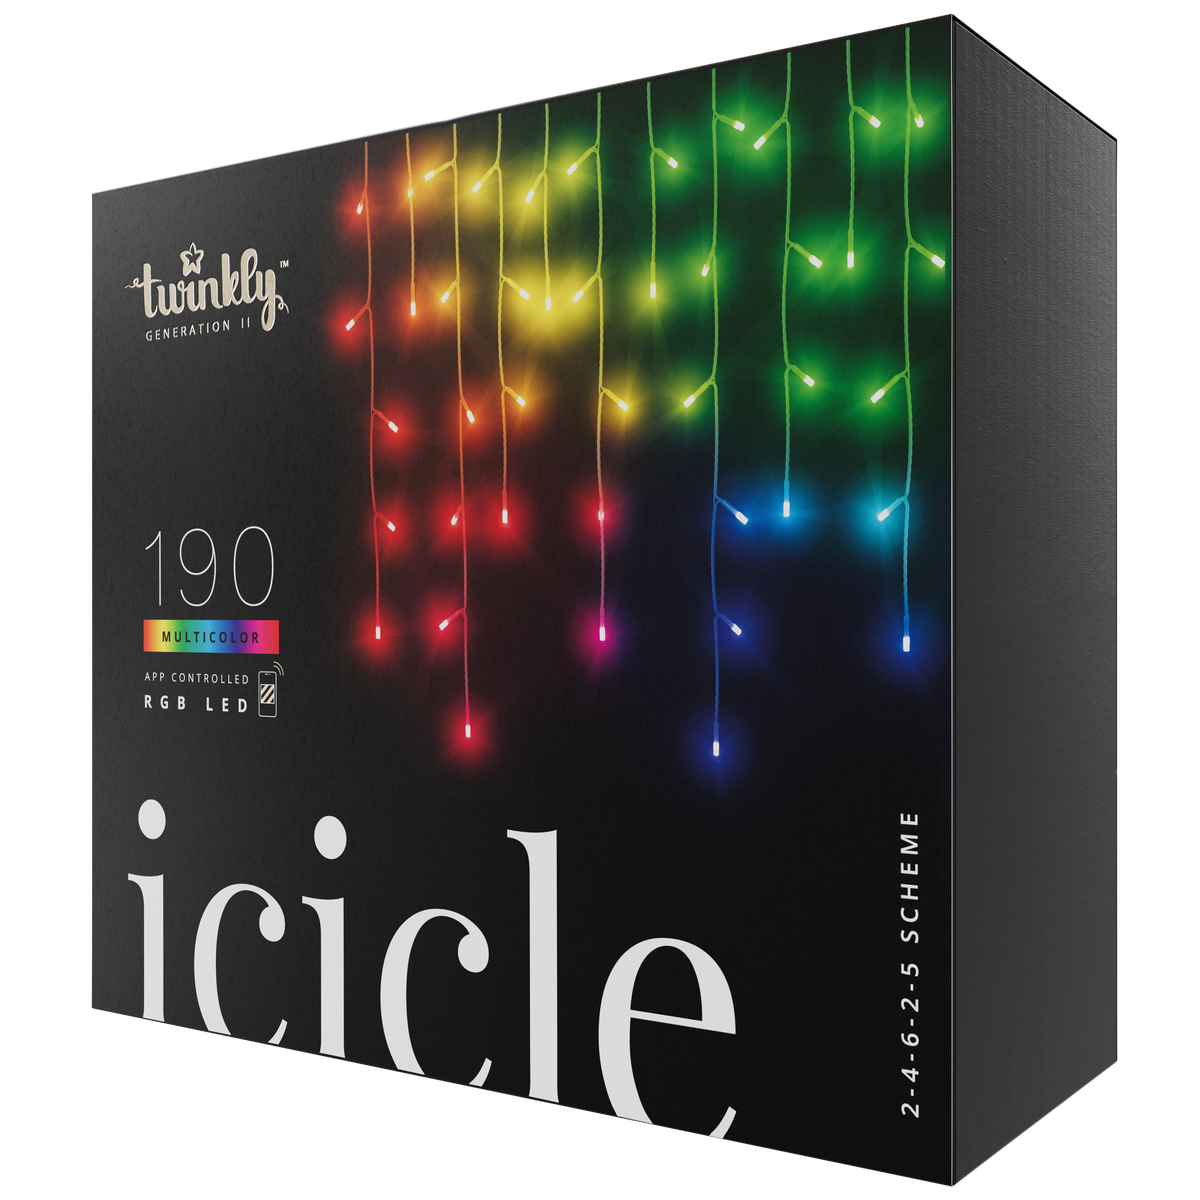 Icicle (πολύχρωμη έκδοση)